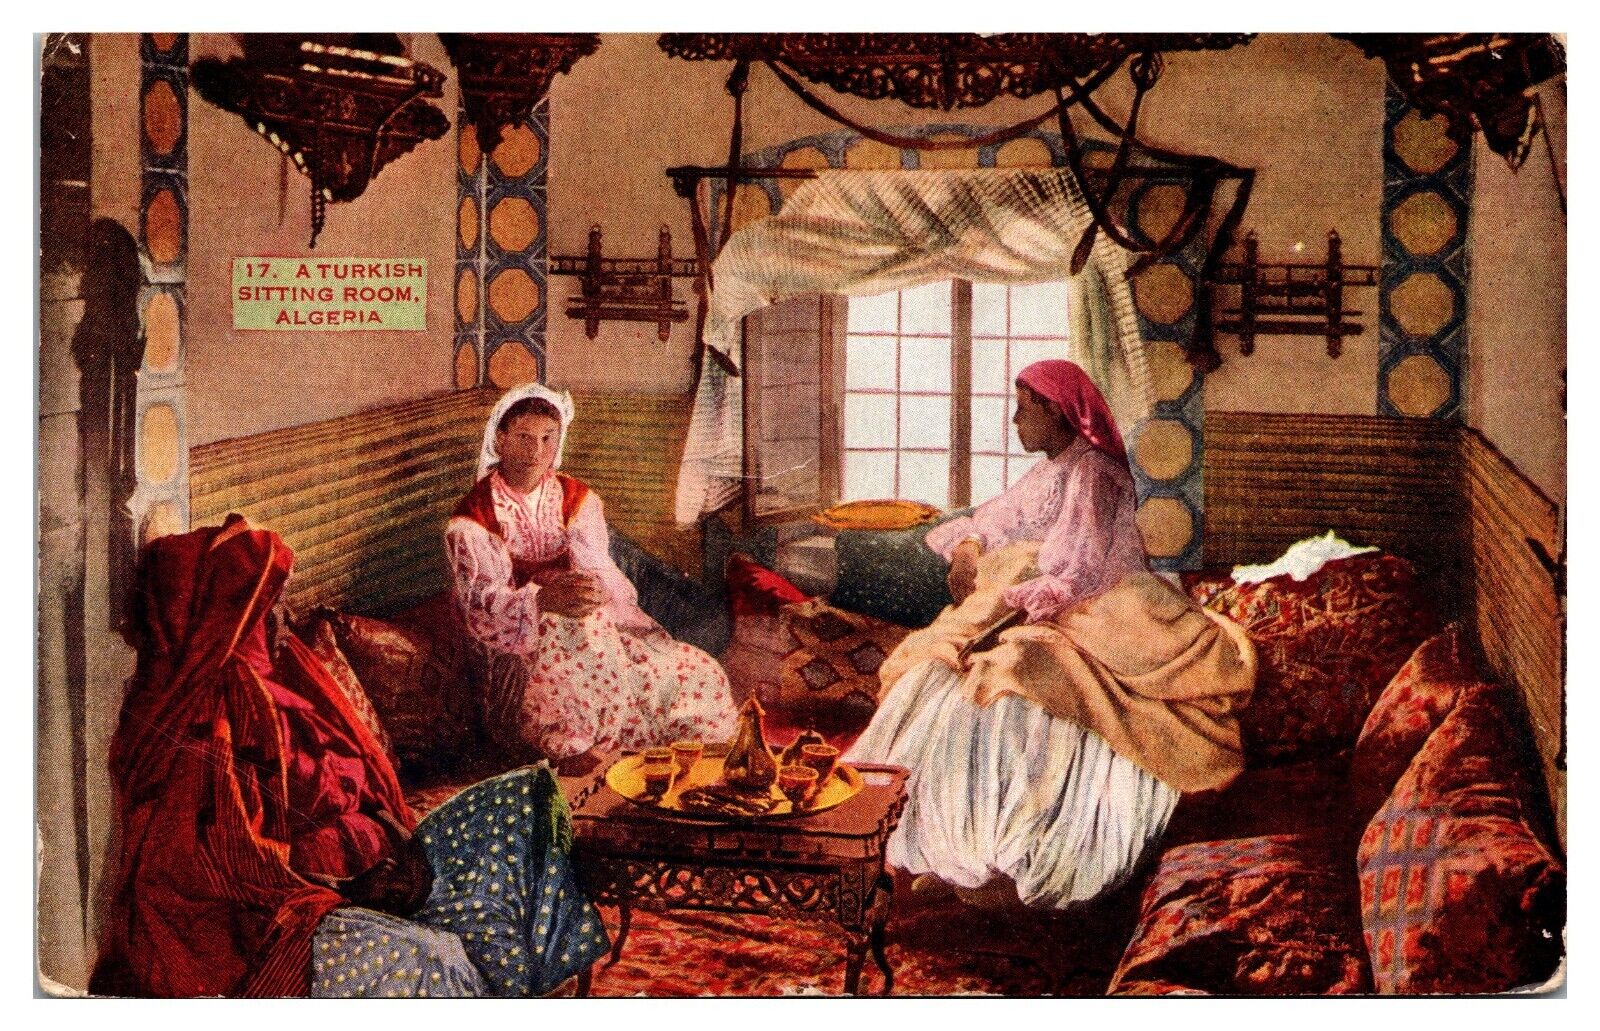 1914 Turkish Sitting Room, Traditionally Dressed Women, Algeria, Postcard